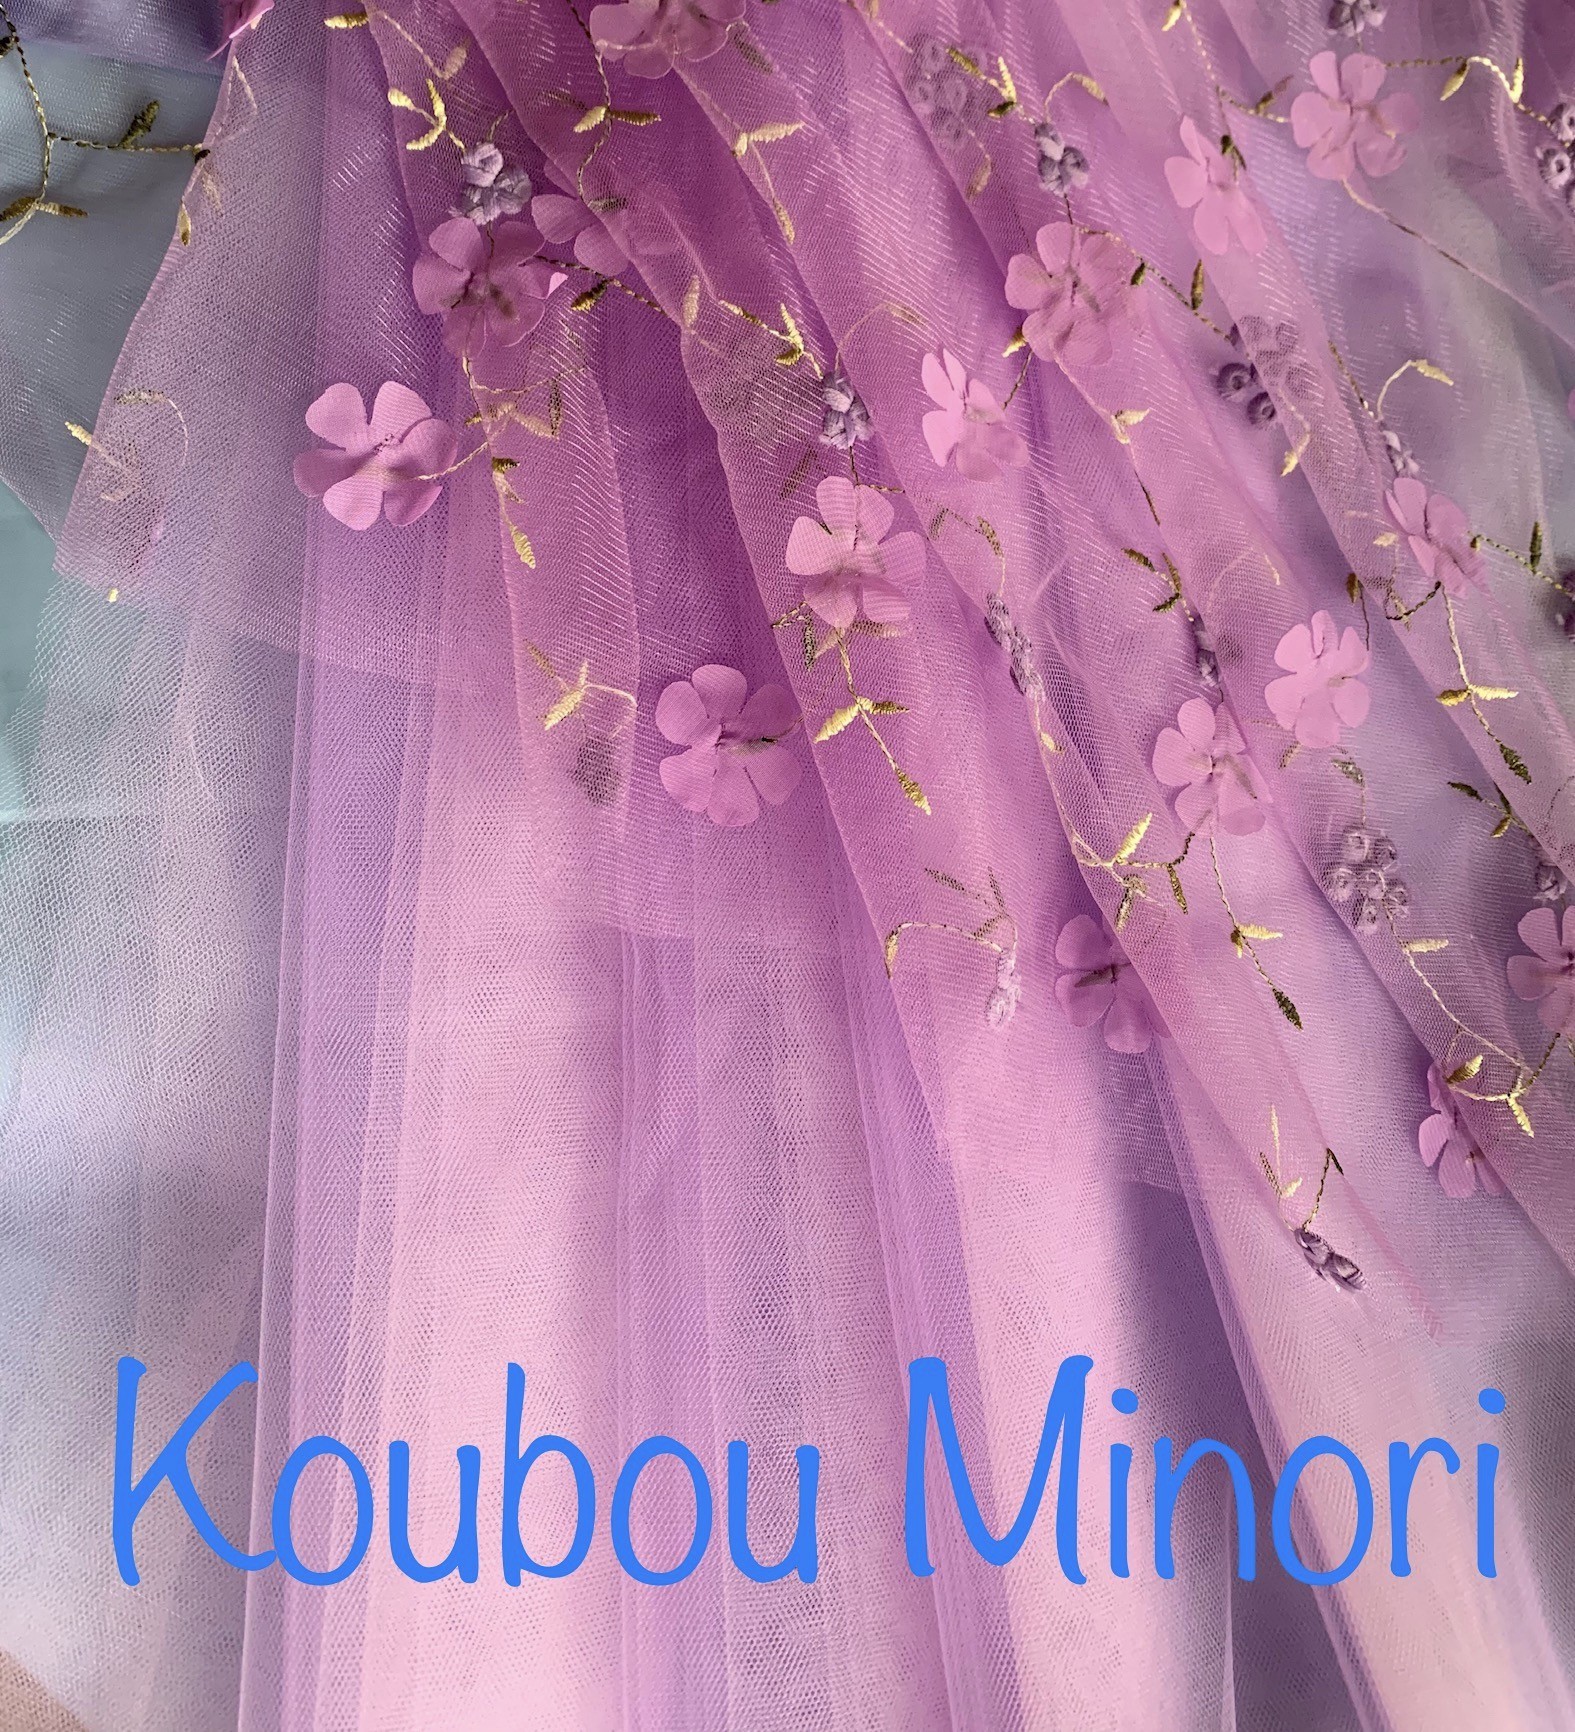 Koubou Minori